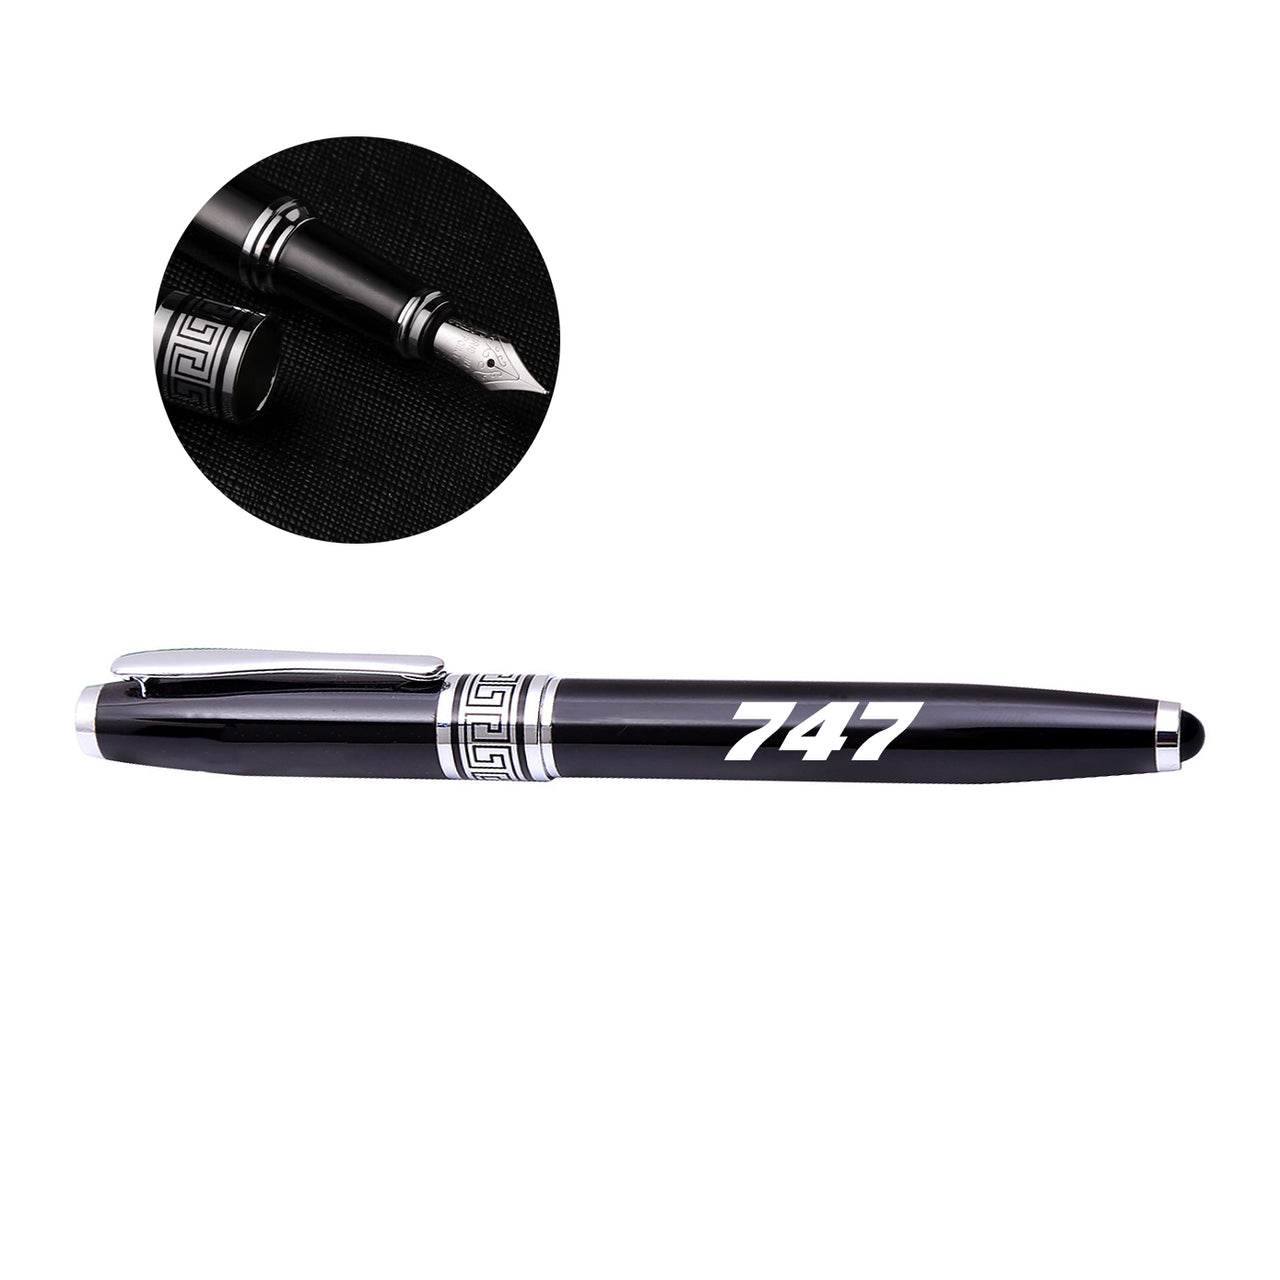 747 Flat Text Designed Pens